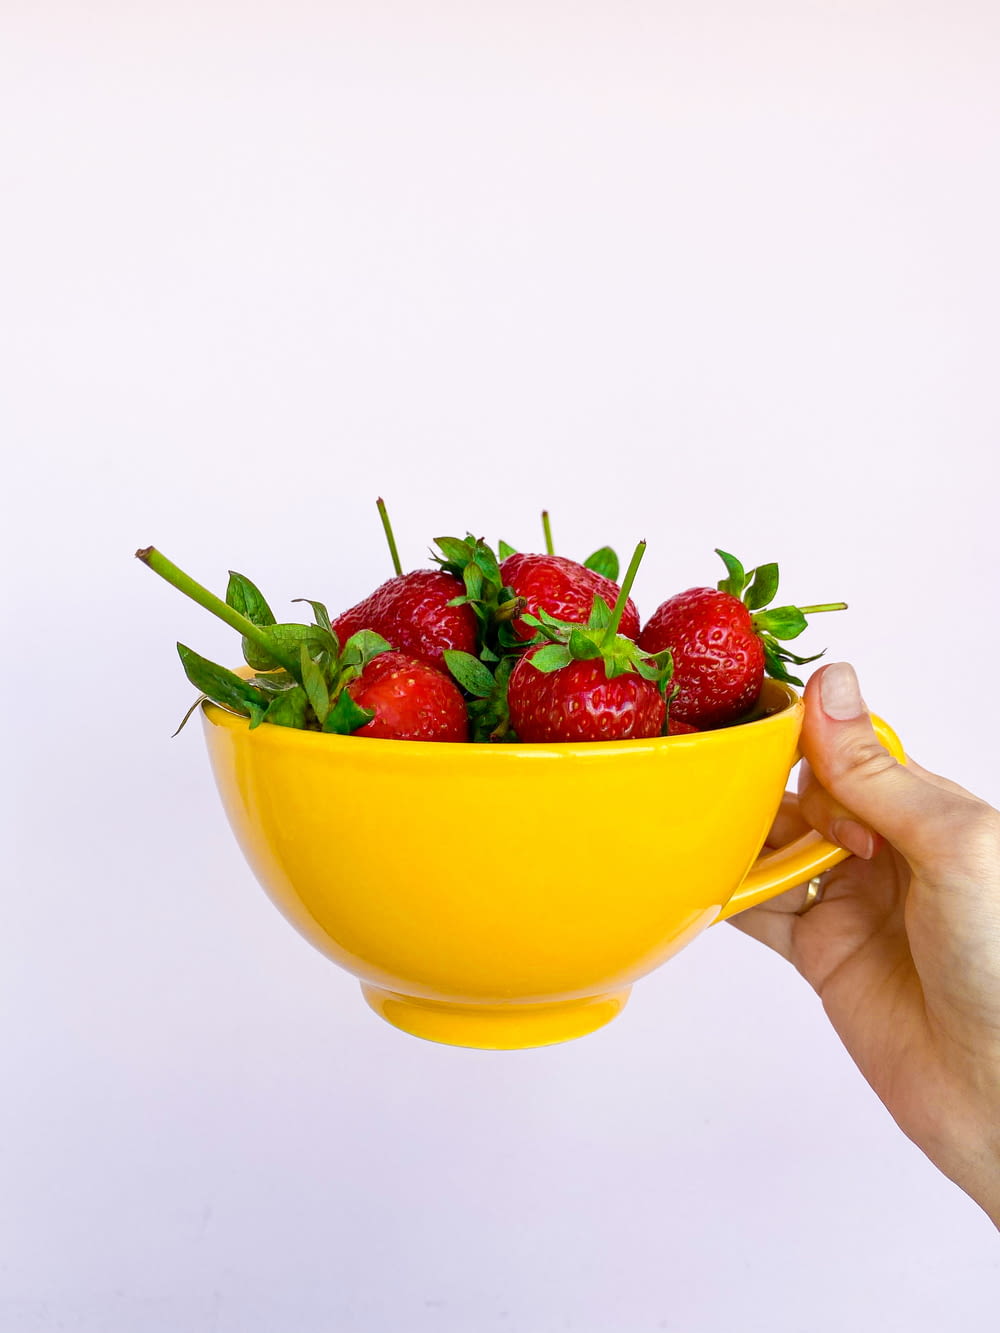 strawberries in yellow ceramic bowl